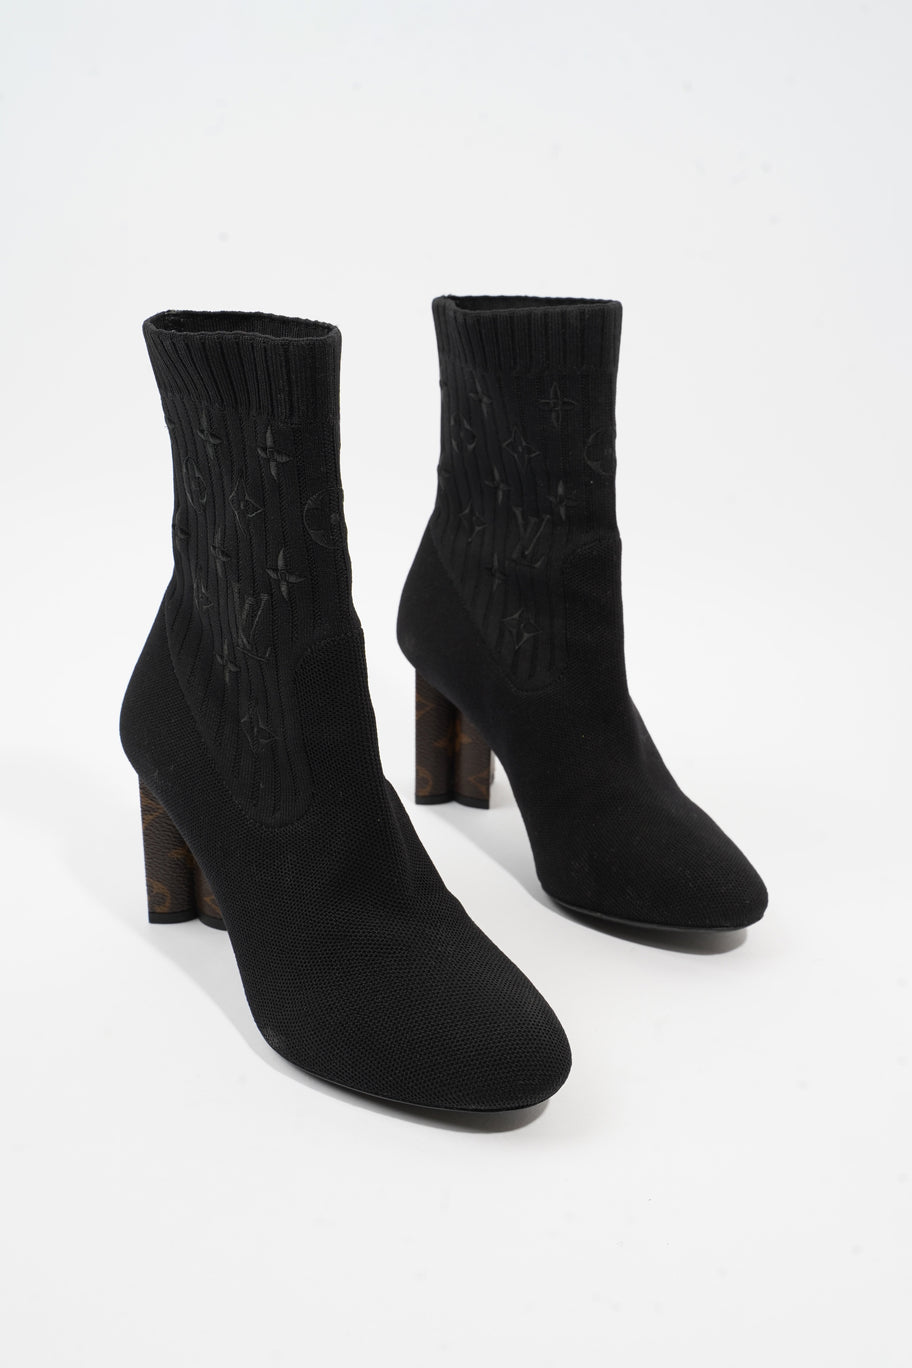 Silhouette Ankle Boot Black Fabric EU 37 UK 4 Image 2